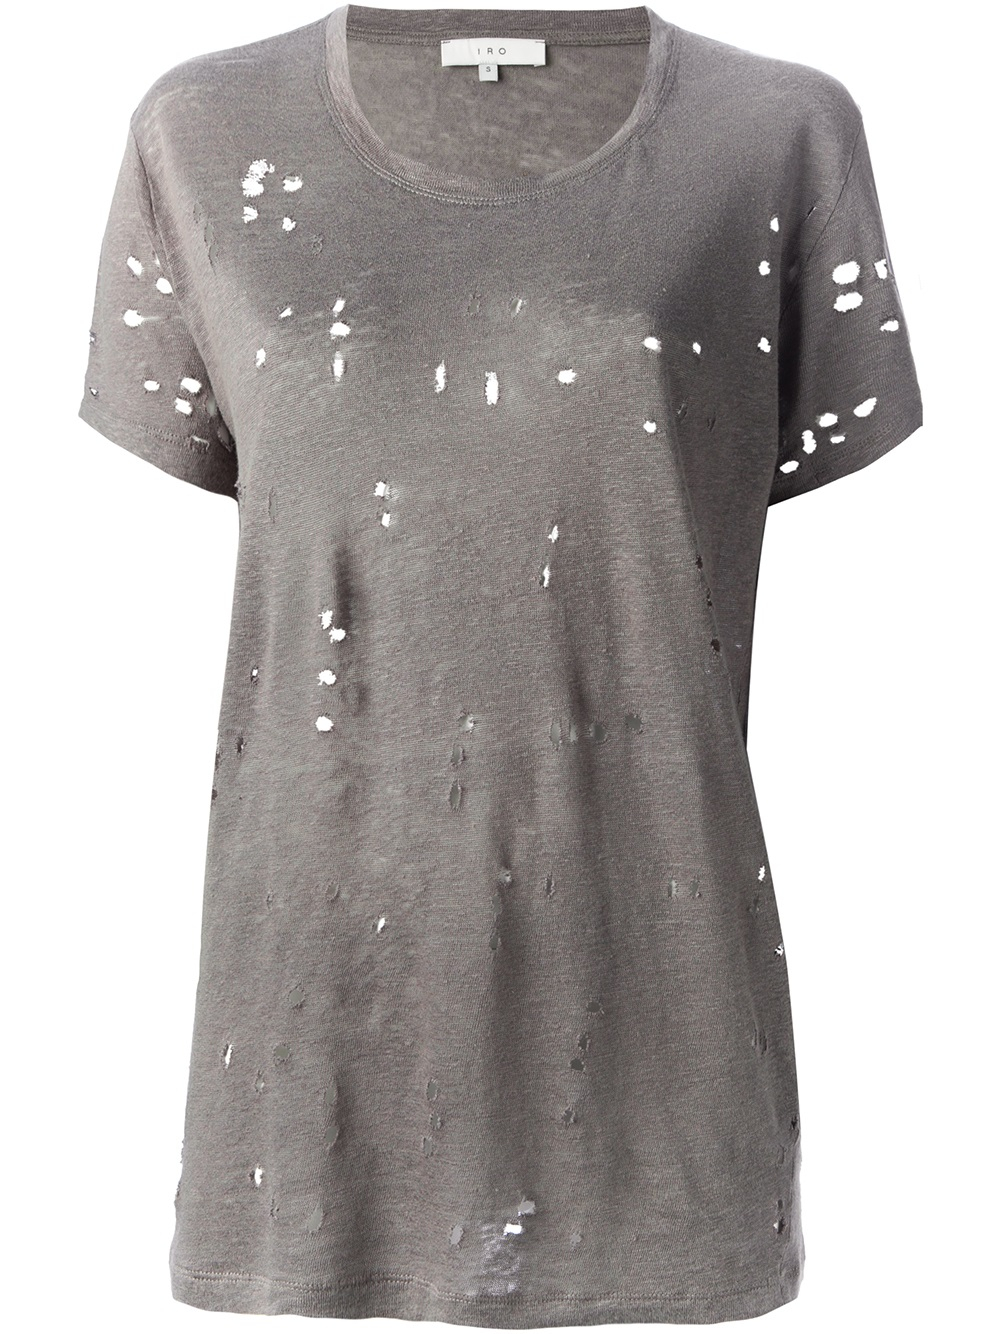 Lyst - Iro Distressed T-Shirt in Gray